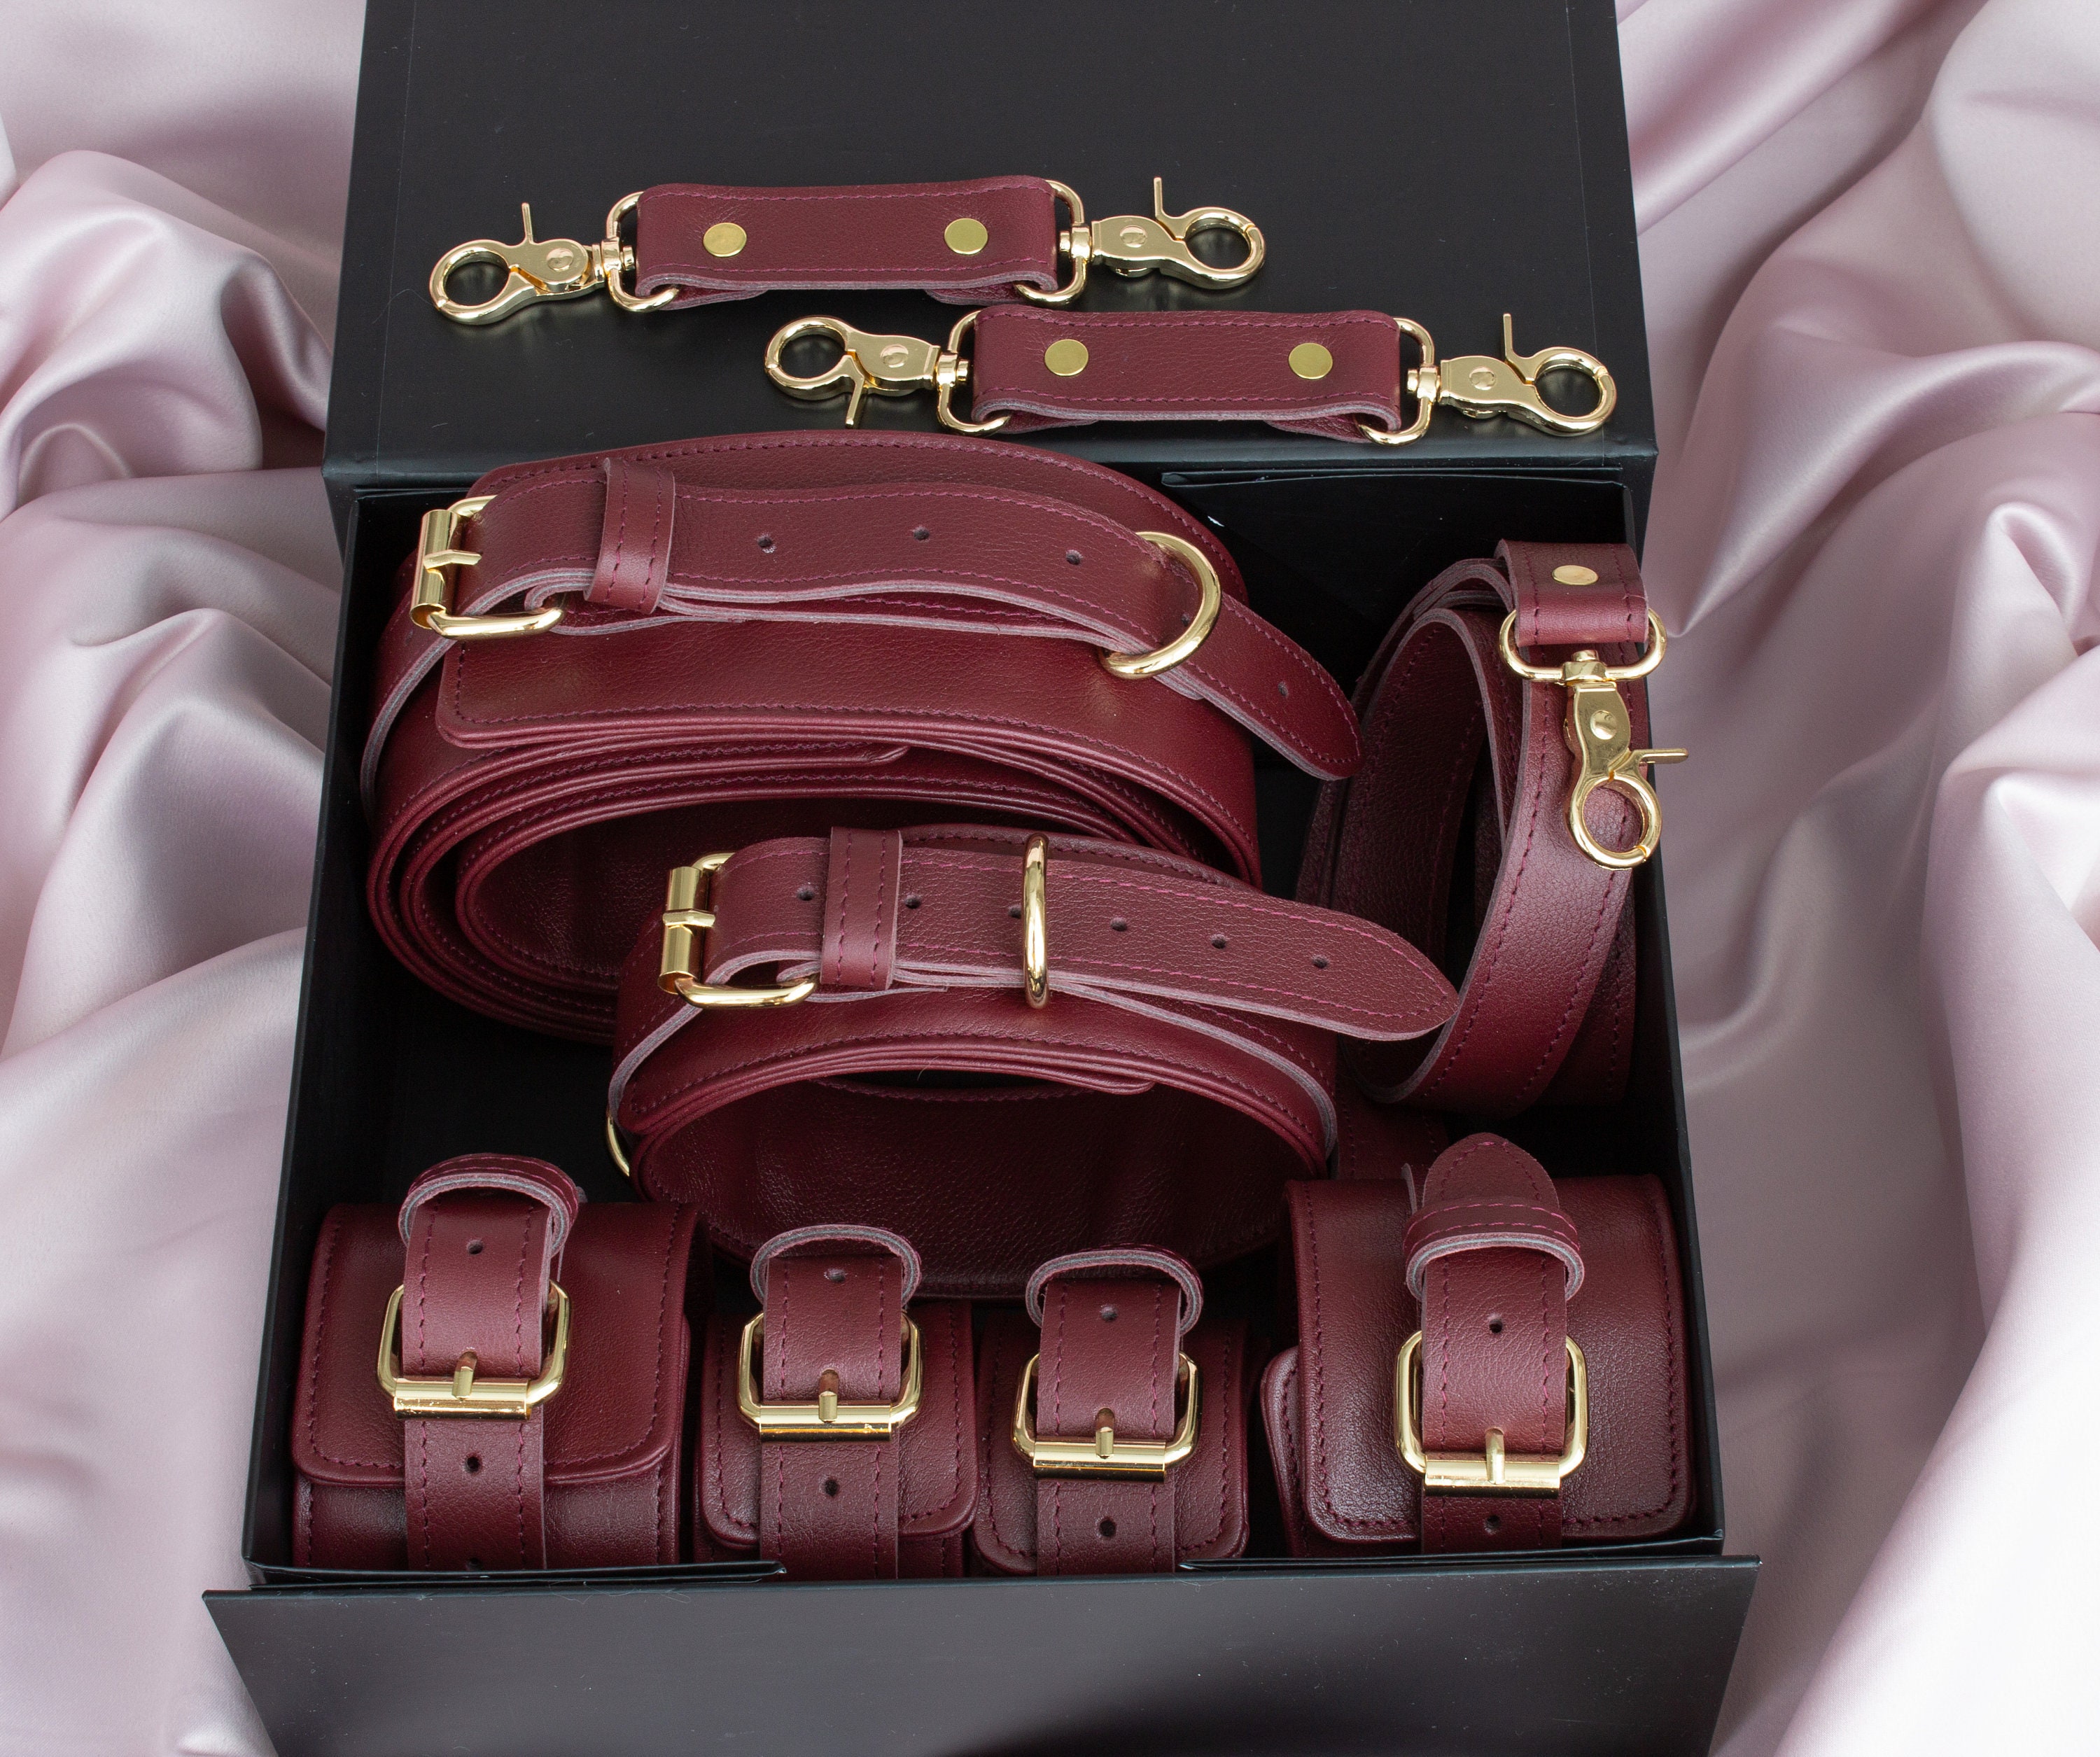 BDSM Luxury NEW Set gold Leather Bondage, BDSM Gear, Premium Restraints sado